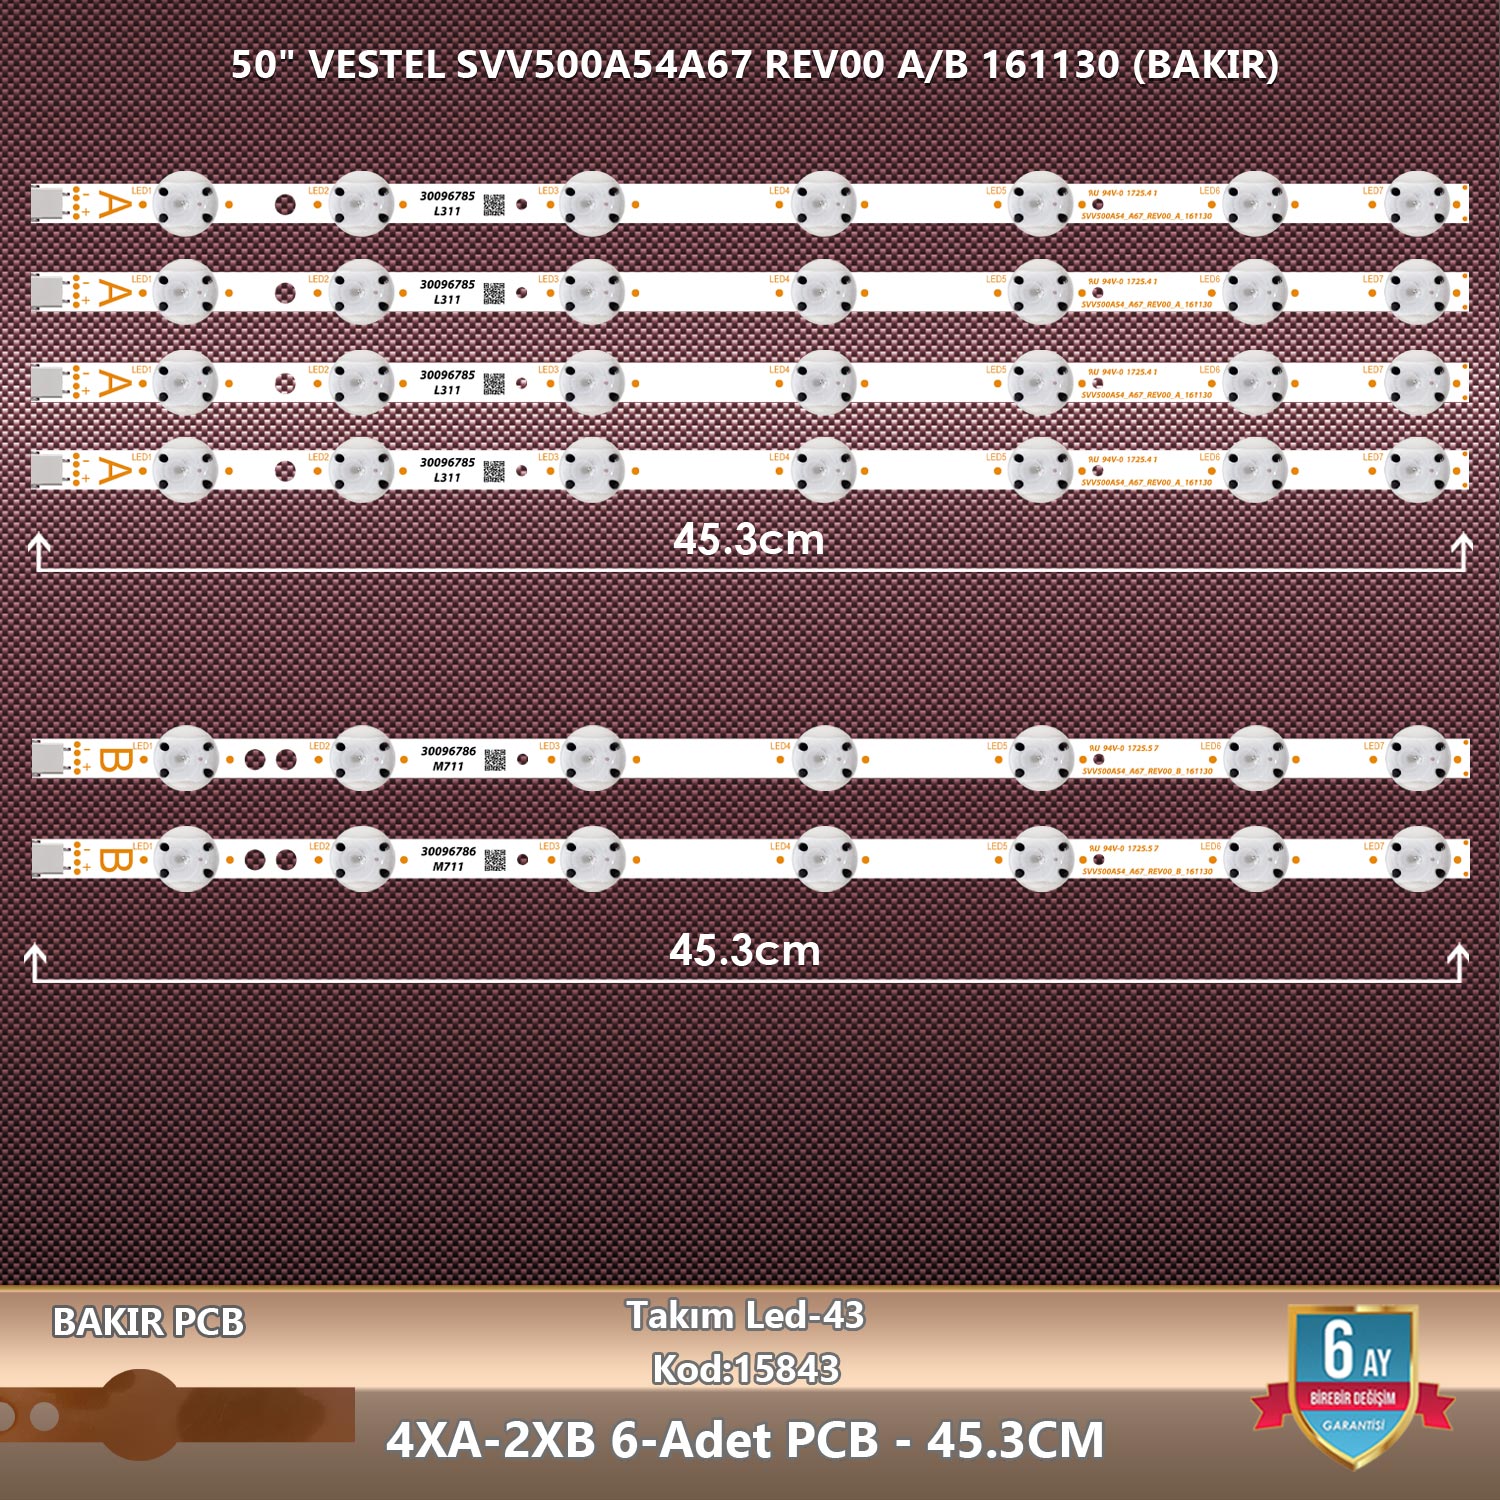 ÇIKMA TAKIM LED-43 (4XA-2XB) 50 VESTEL SVV500A54A67 REV00 A/B 161130 (BAKIR)